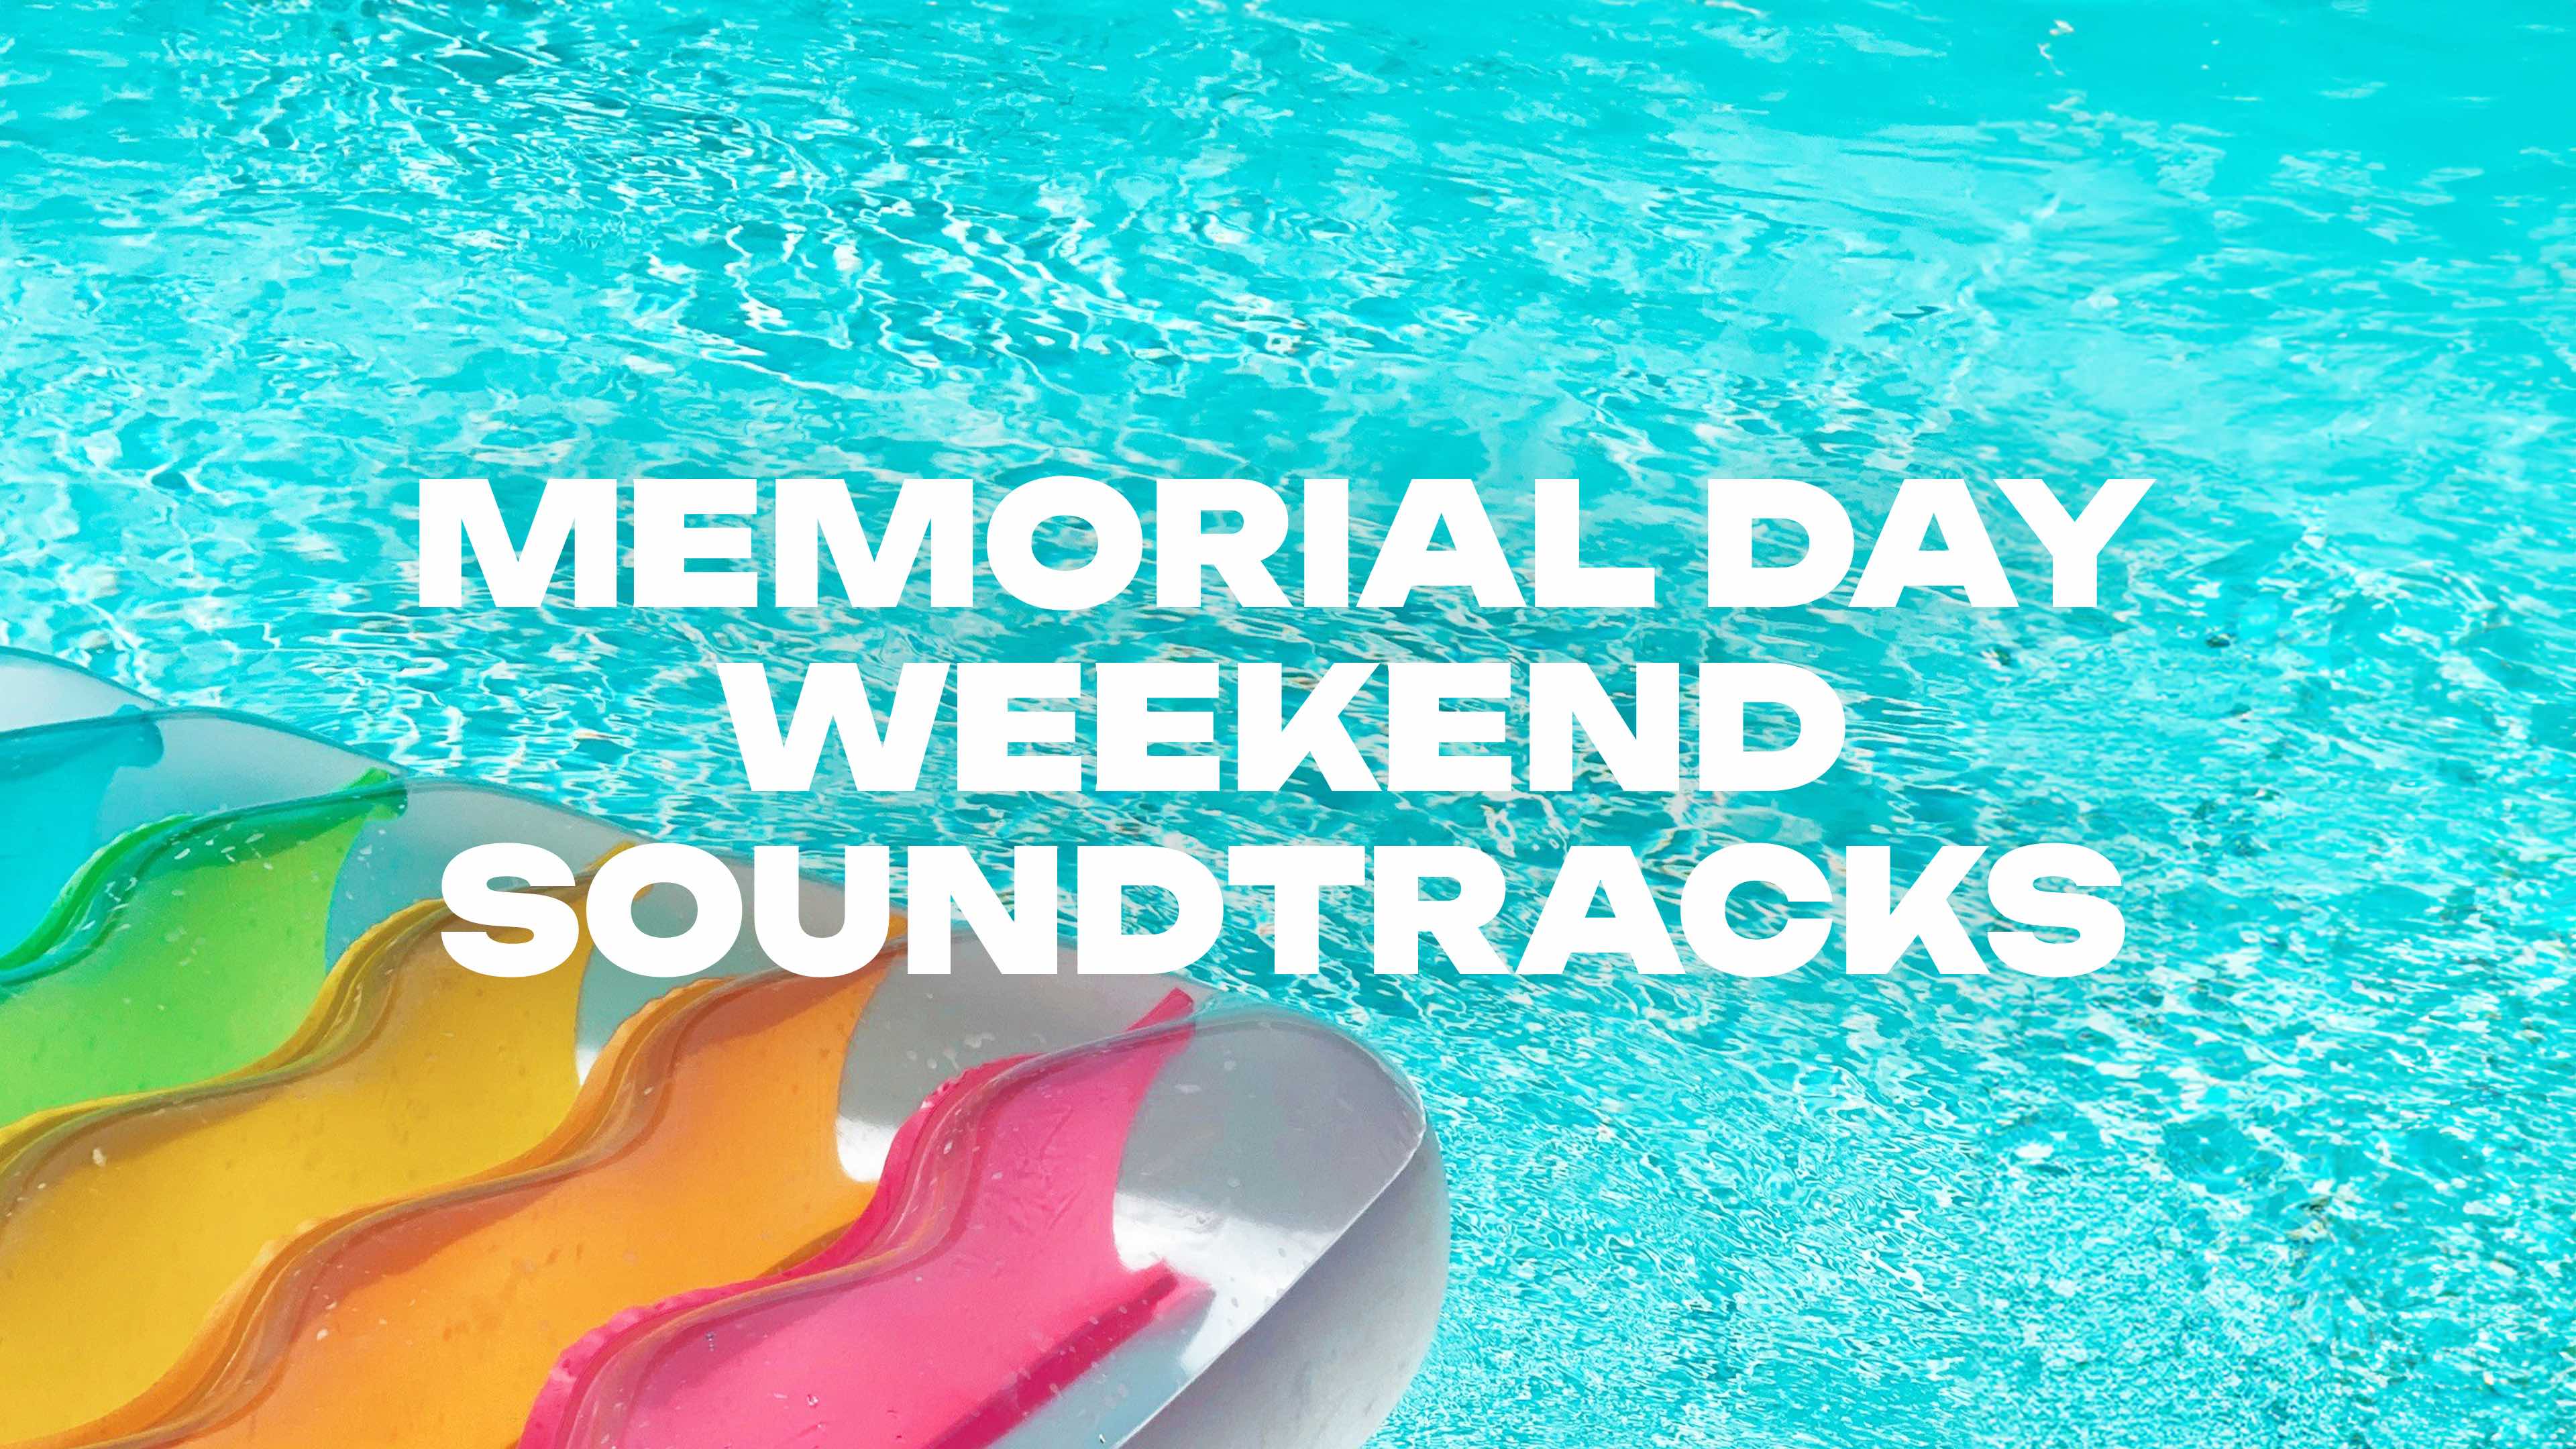 Memorial Day Weekend Soundtracks on SiriusXM